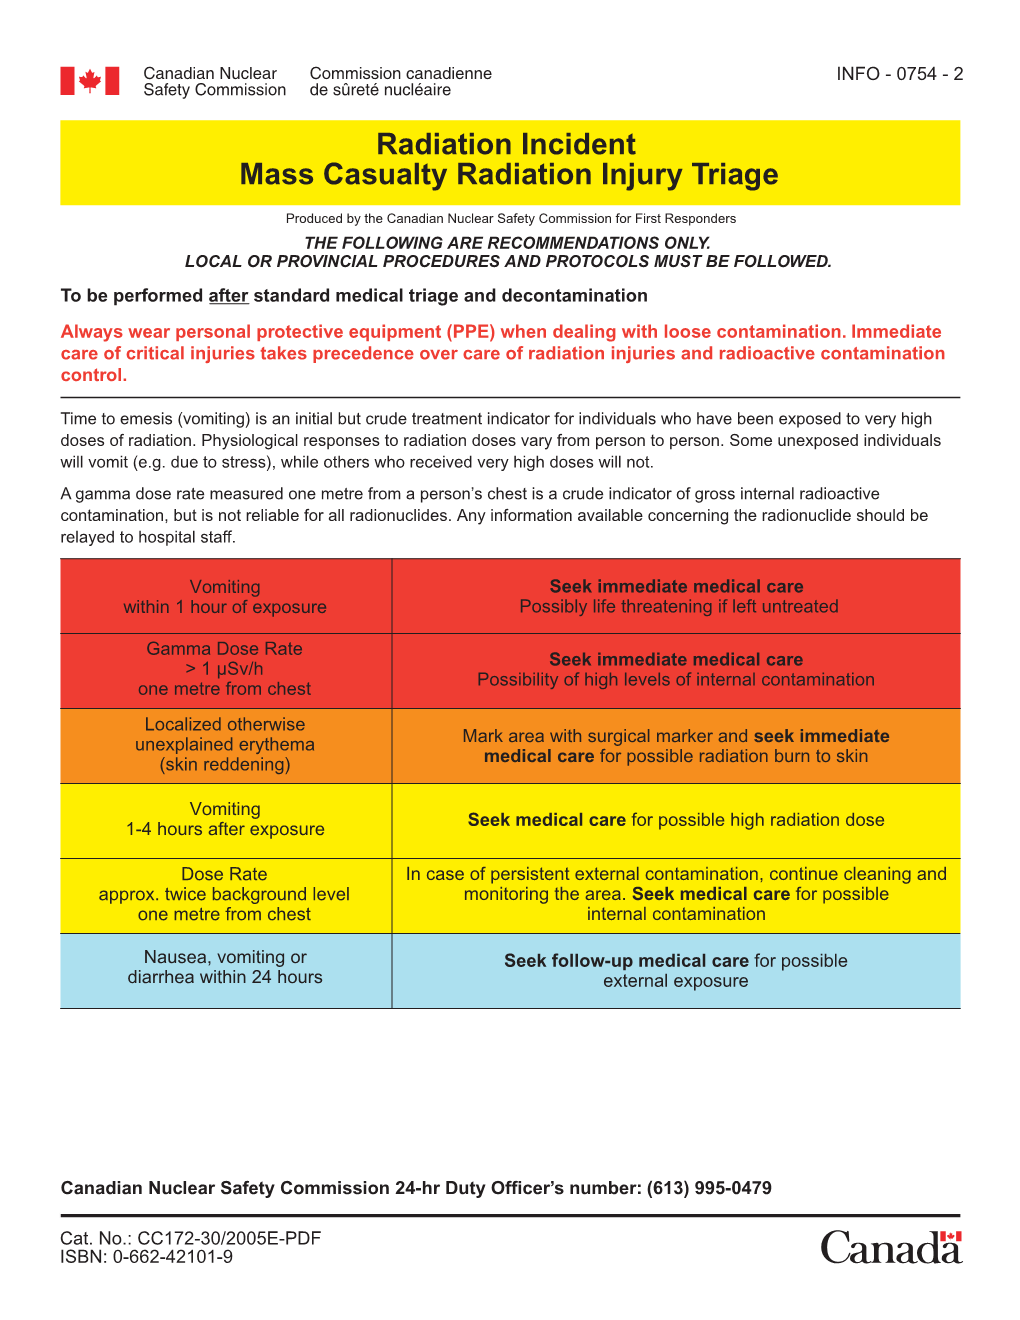 Mass Casualty Radiation Injury Triage